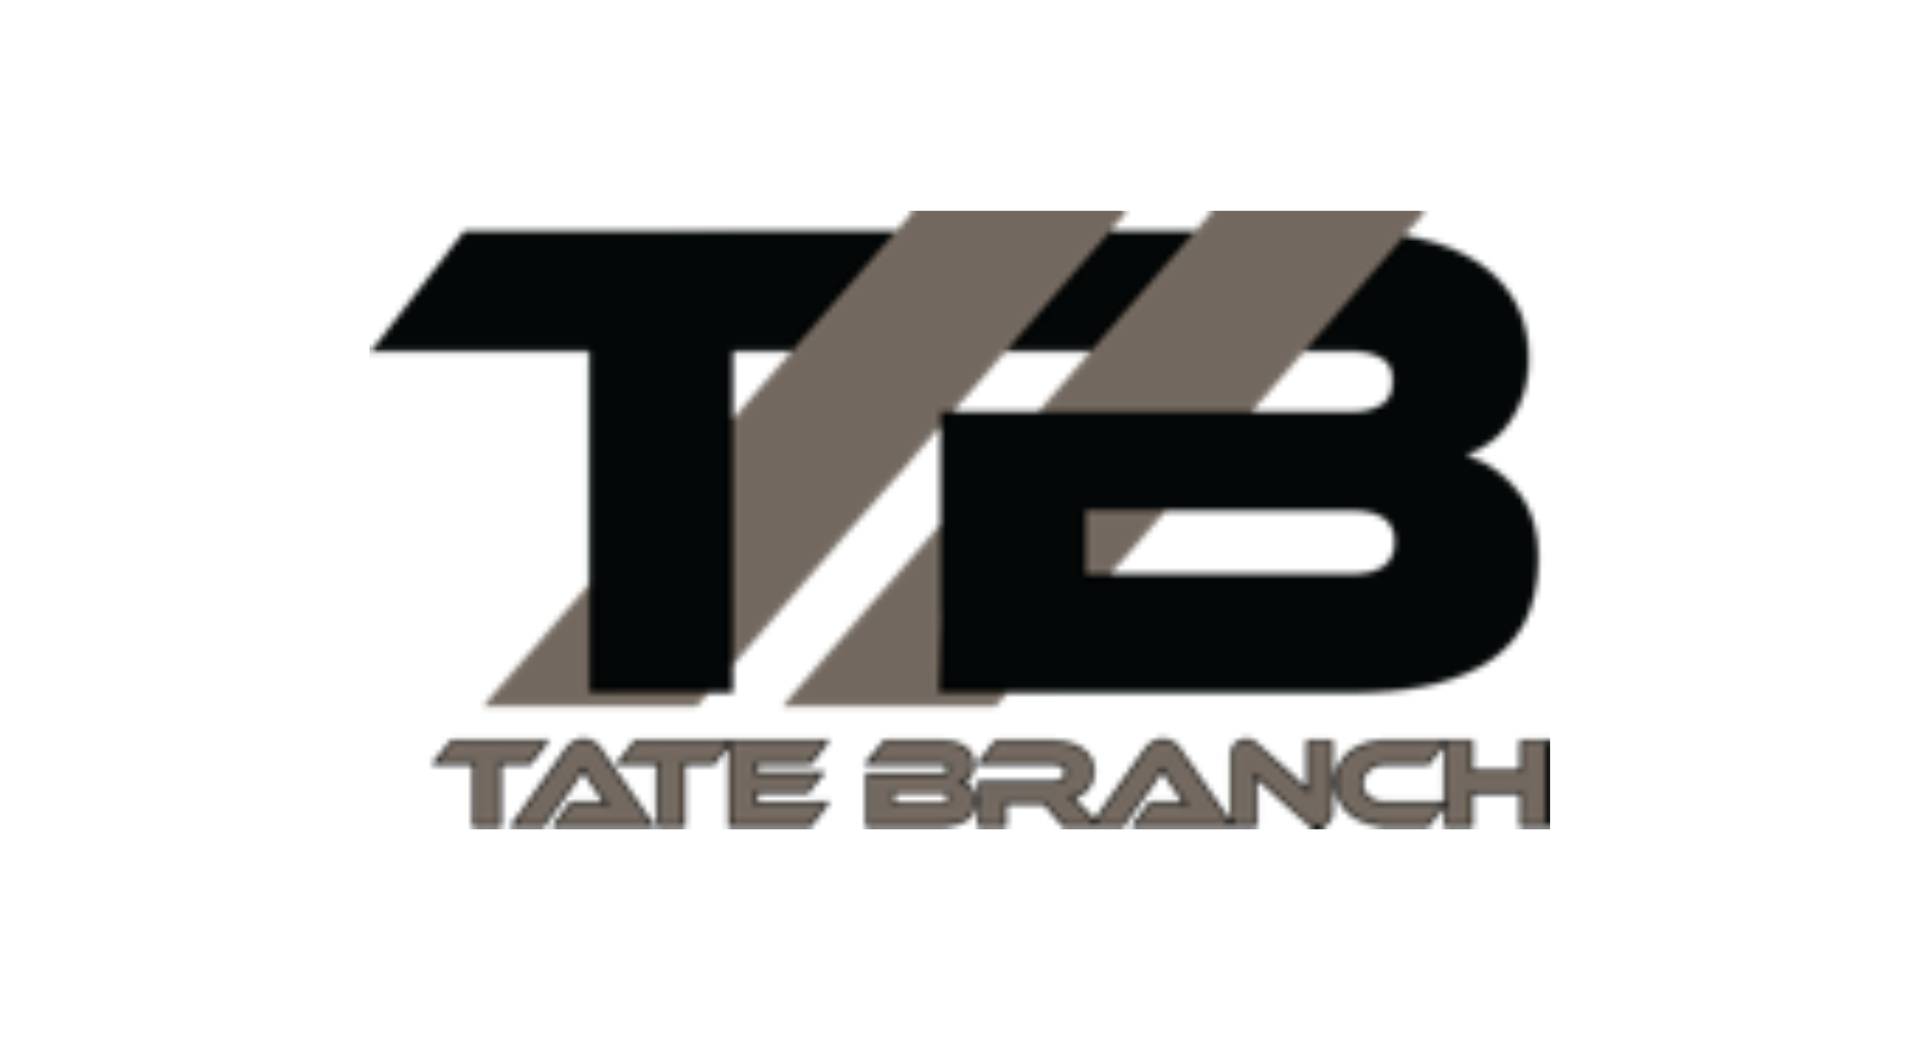 Tate Branch Autoplex is a Certified Ag Dealer.